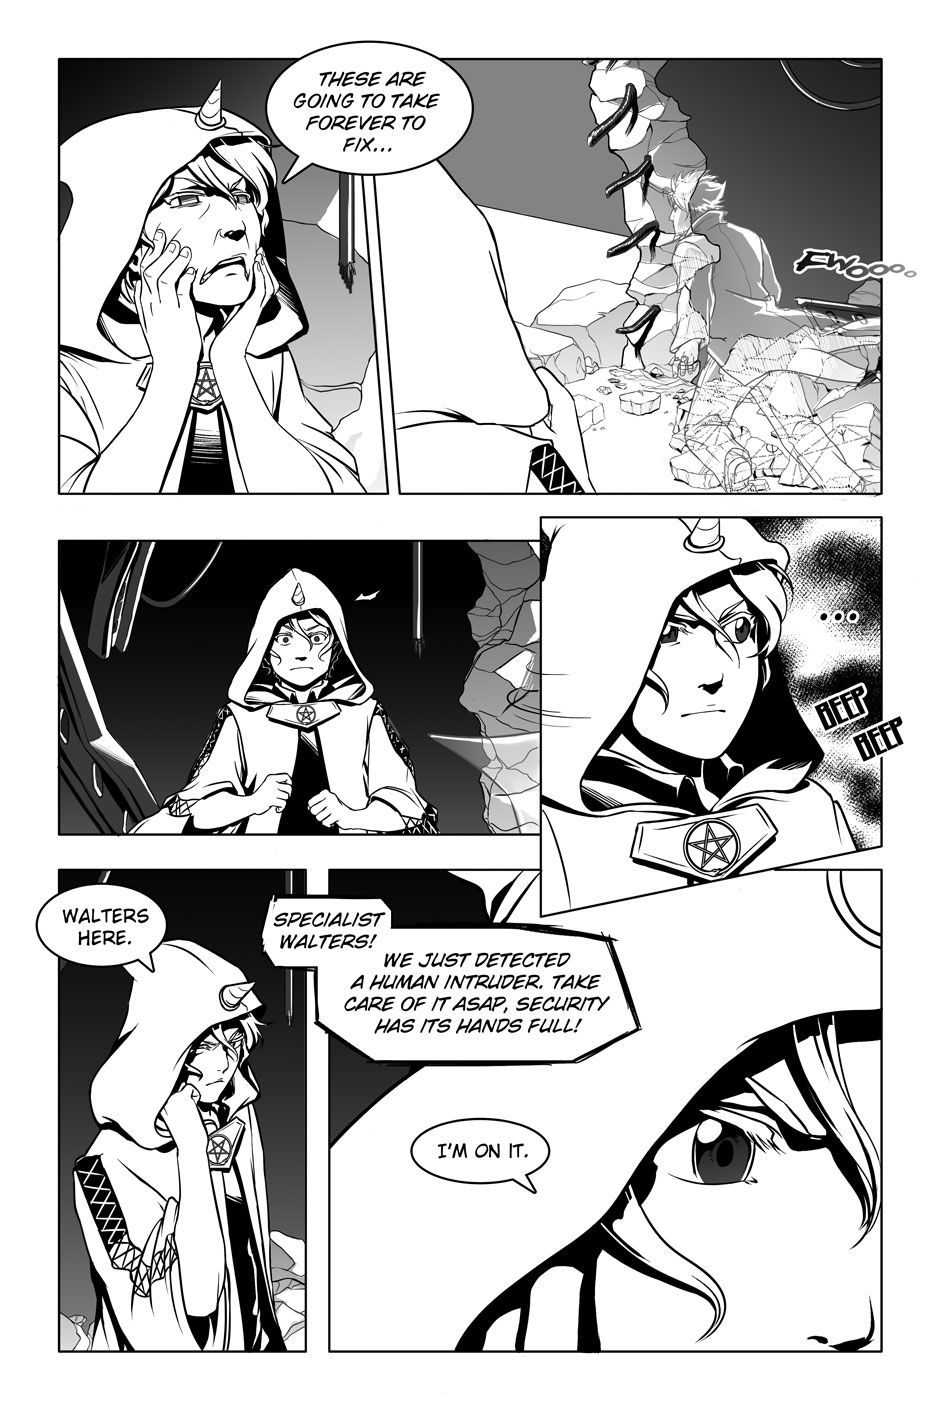 Midwinter Vol 1 Page 14